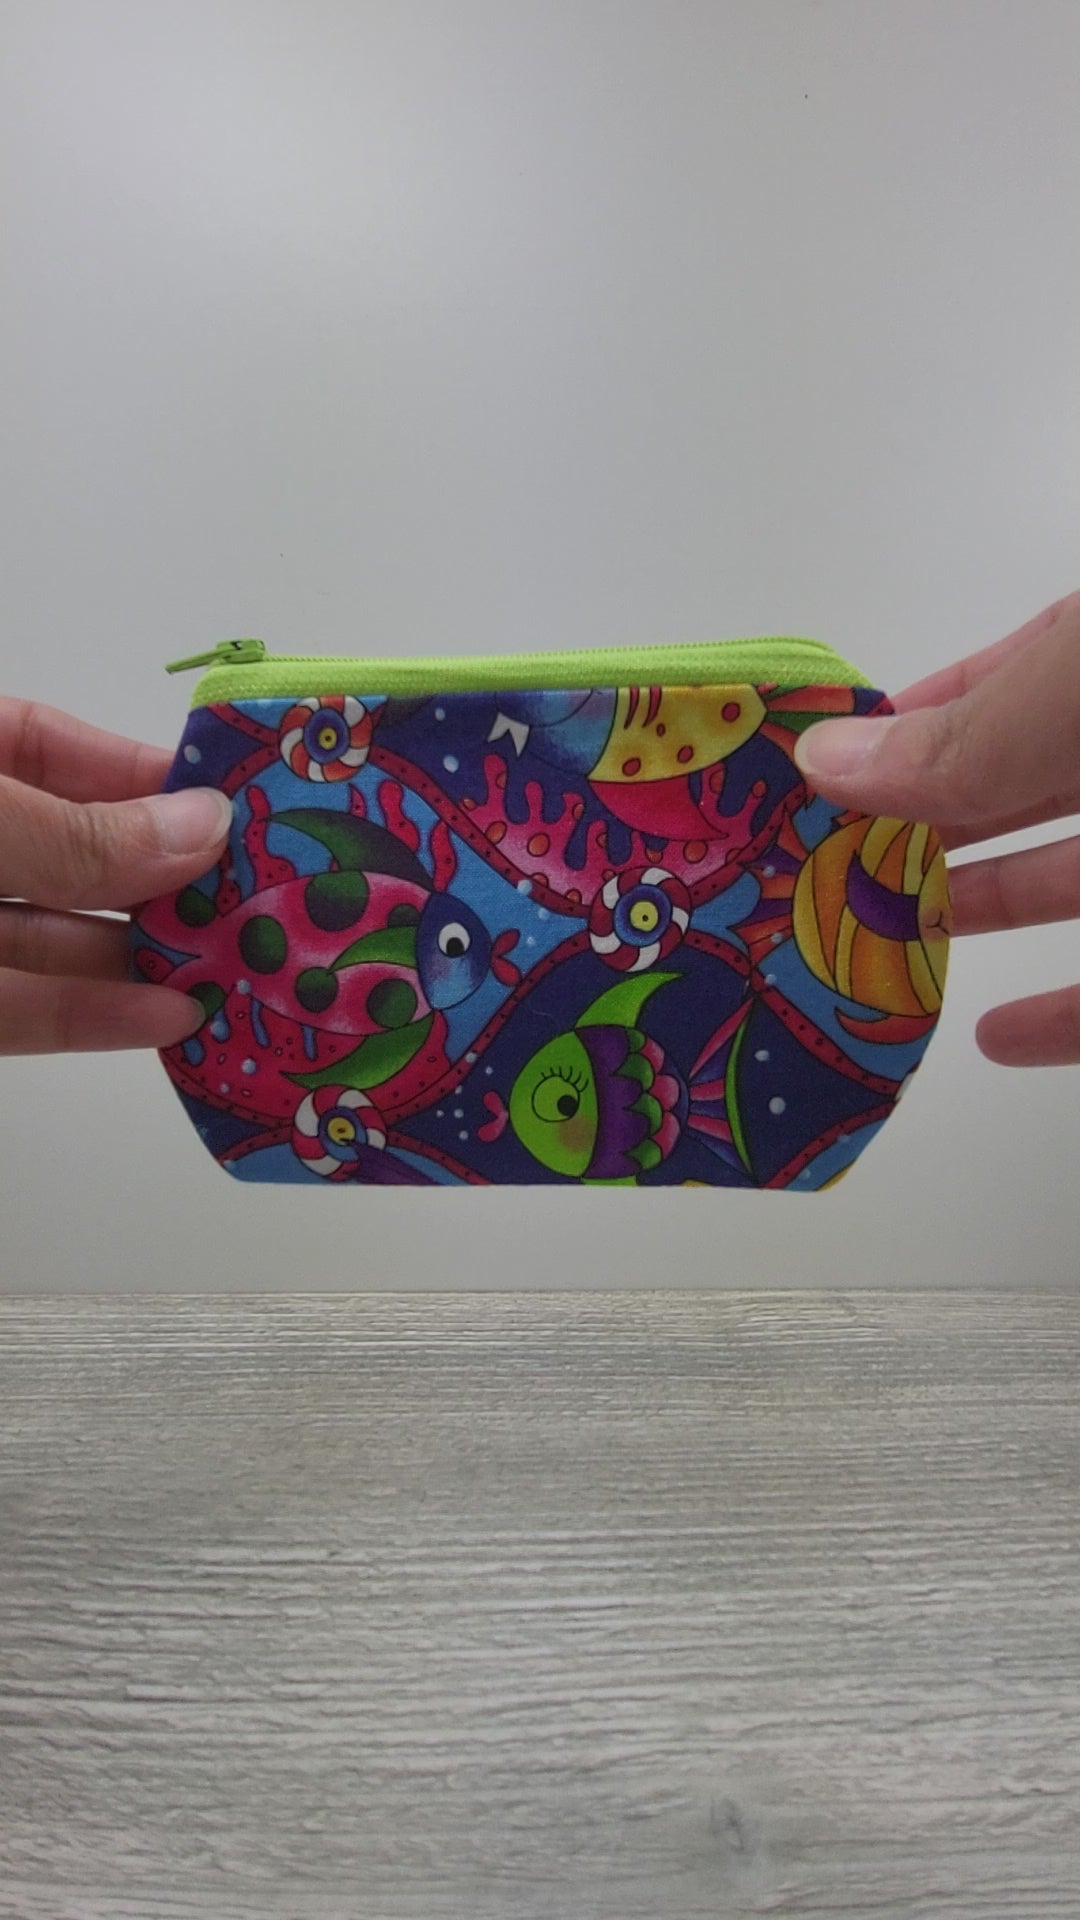 Short video showing a mini zipper pouch.